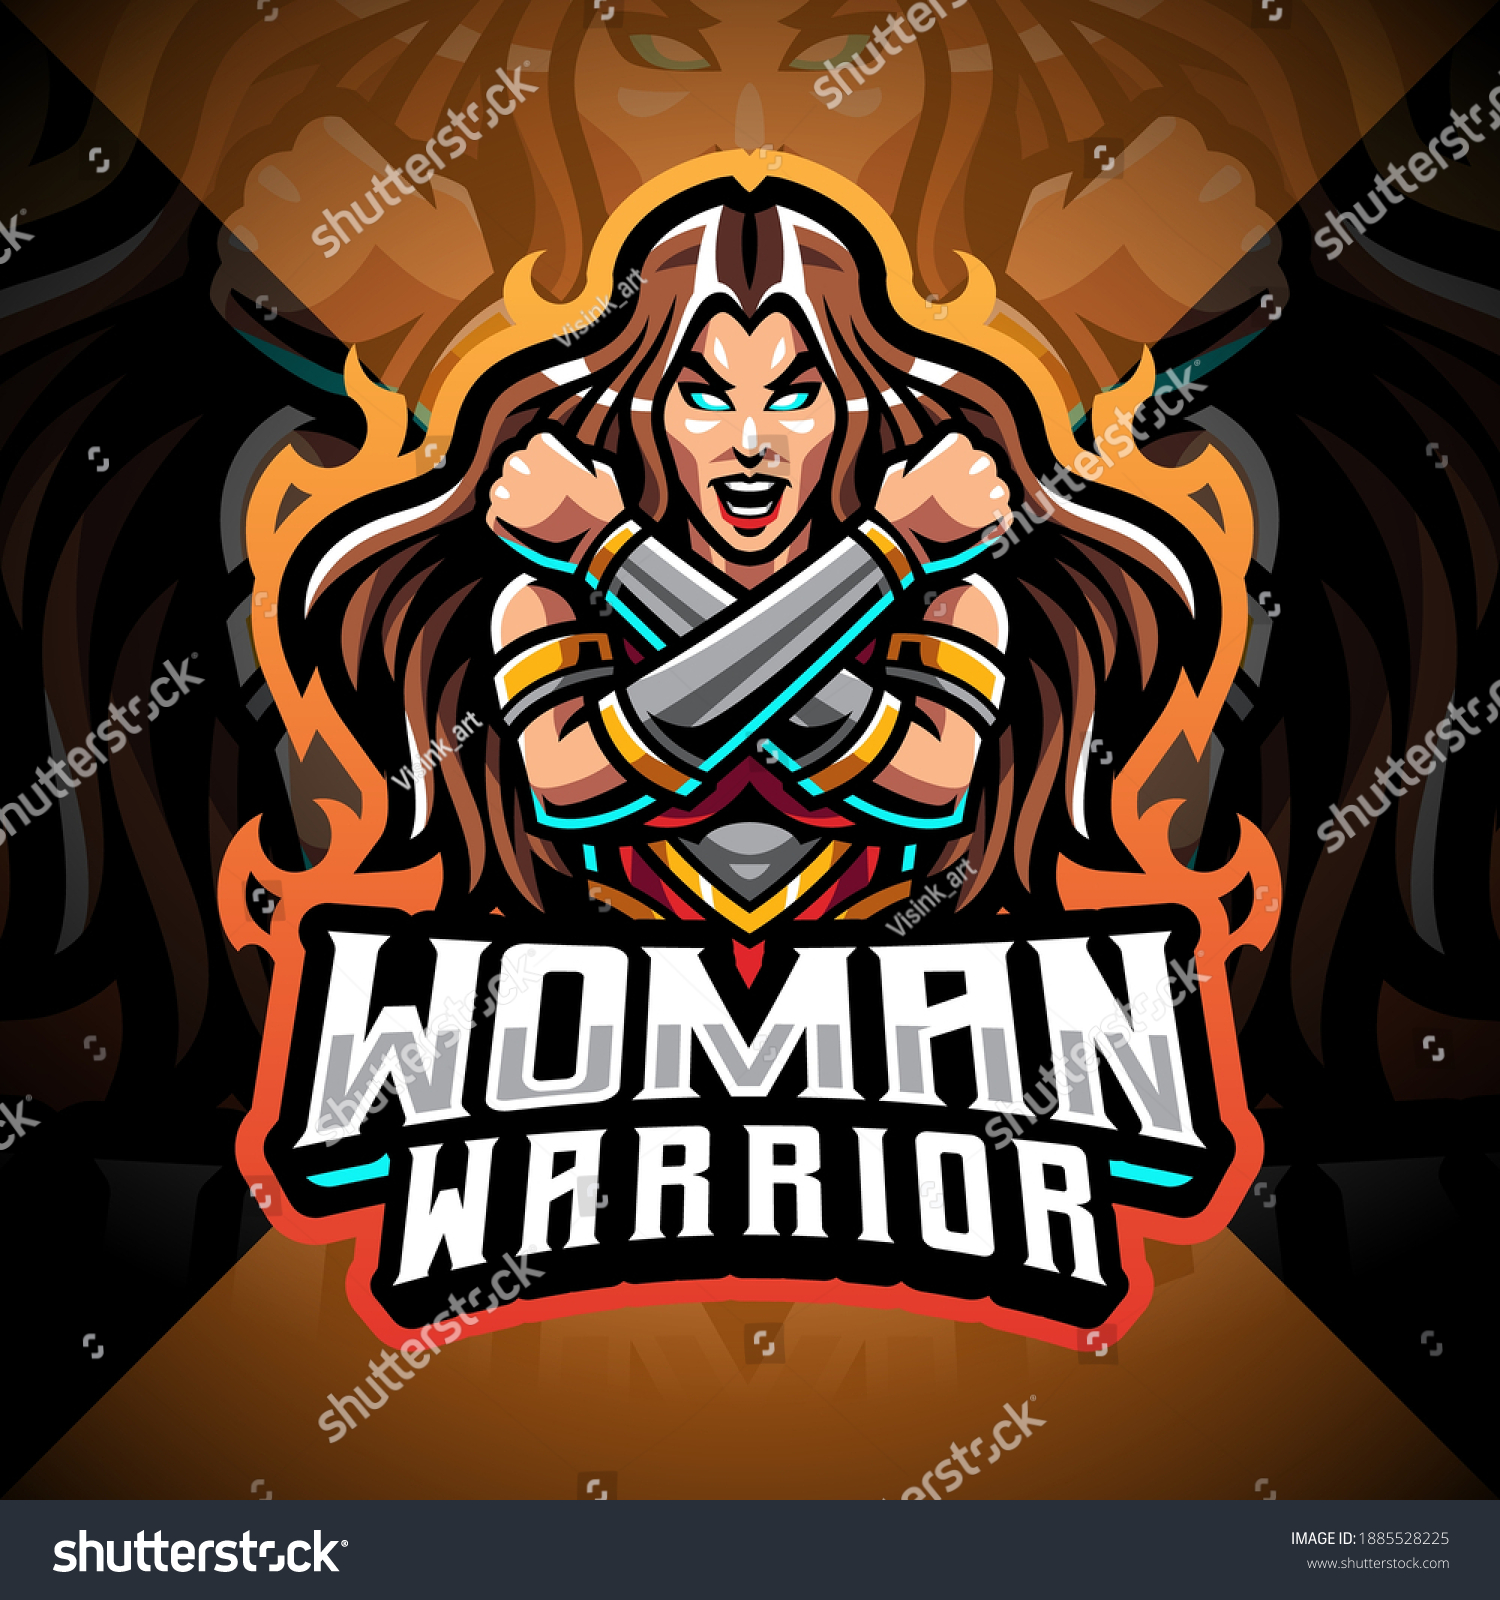 SVG of Women warrior esport mascot logo design svg